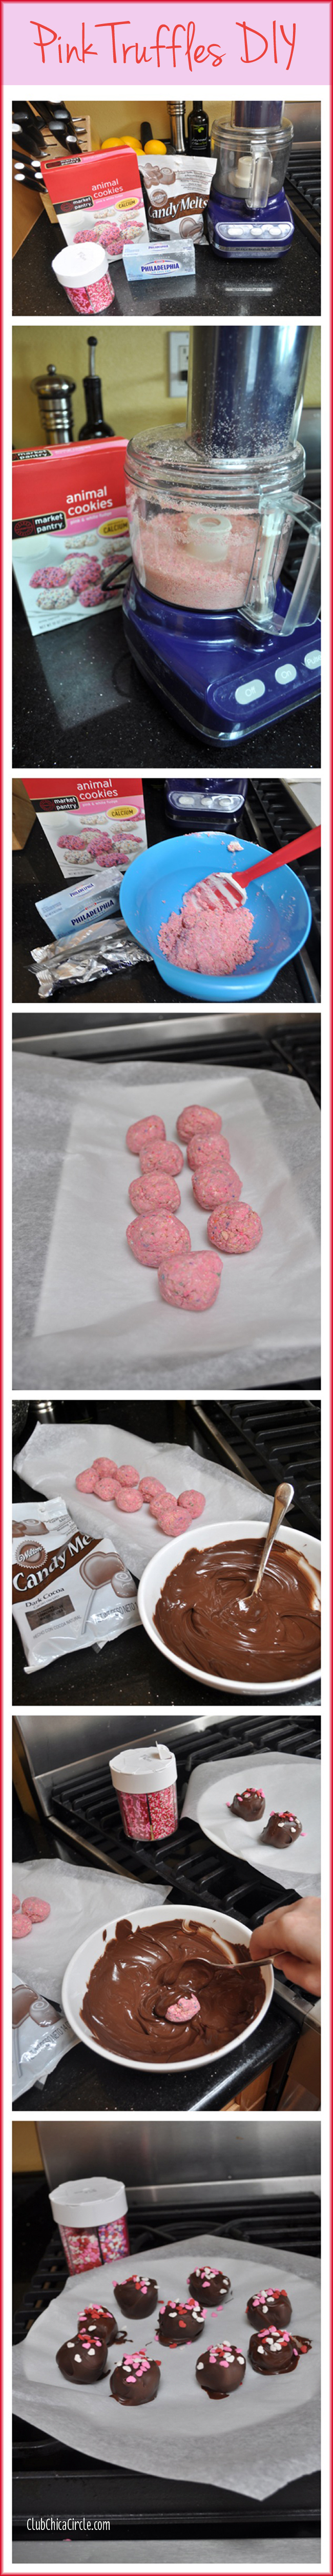 Easy Pink Truffles recipe DIY